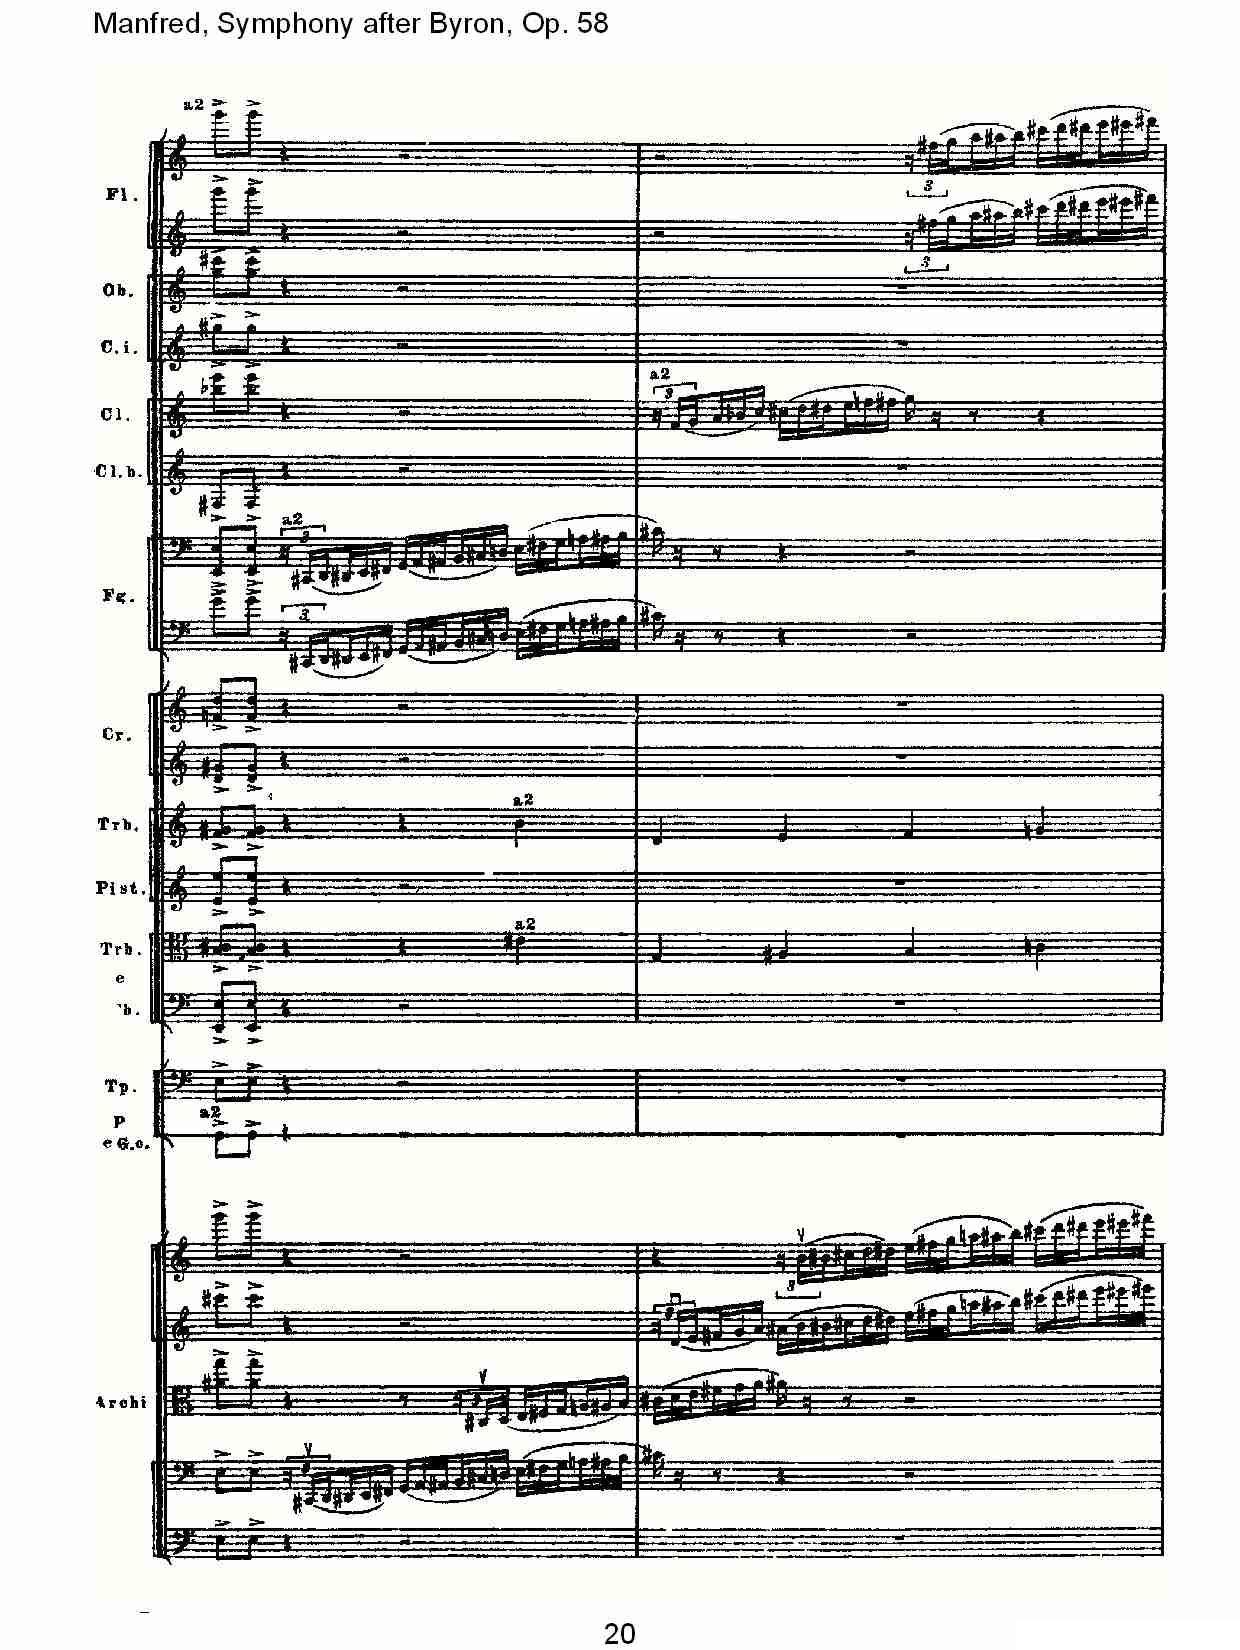 Manfred, Symphony after Byron, Op.58第一乐章（一）其它曲谱（图20）